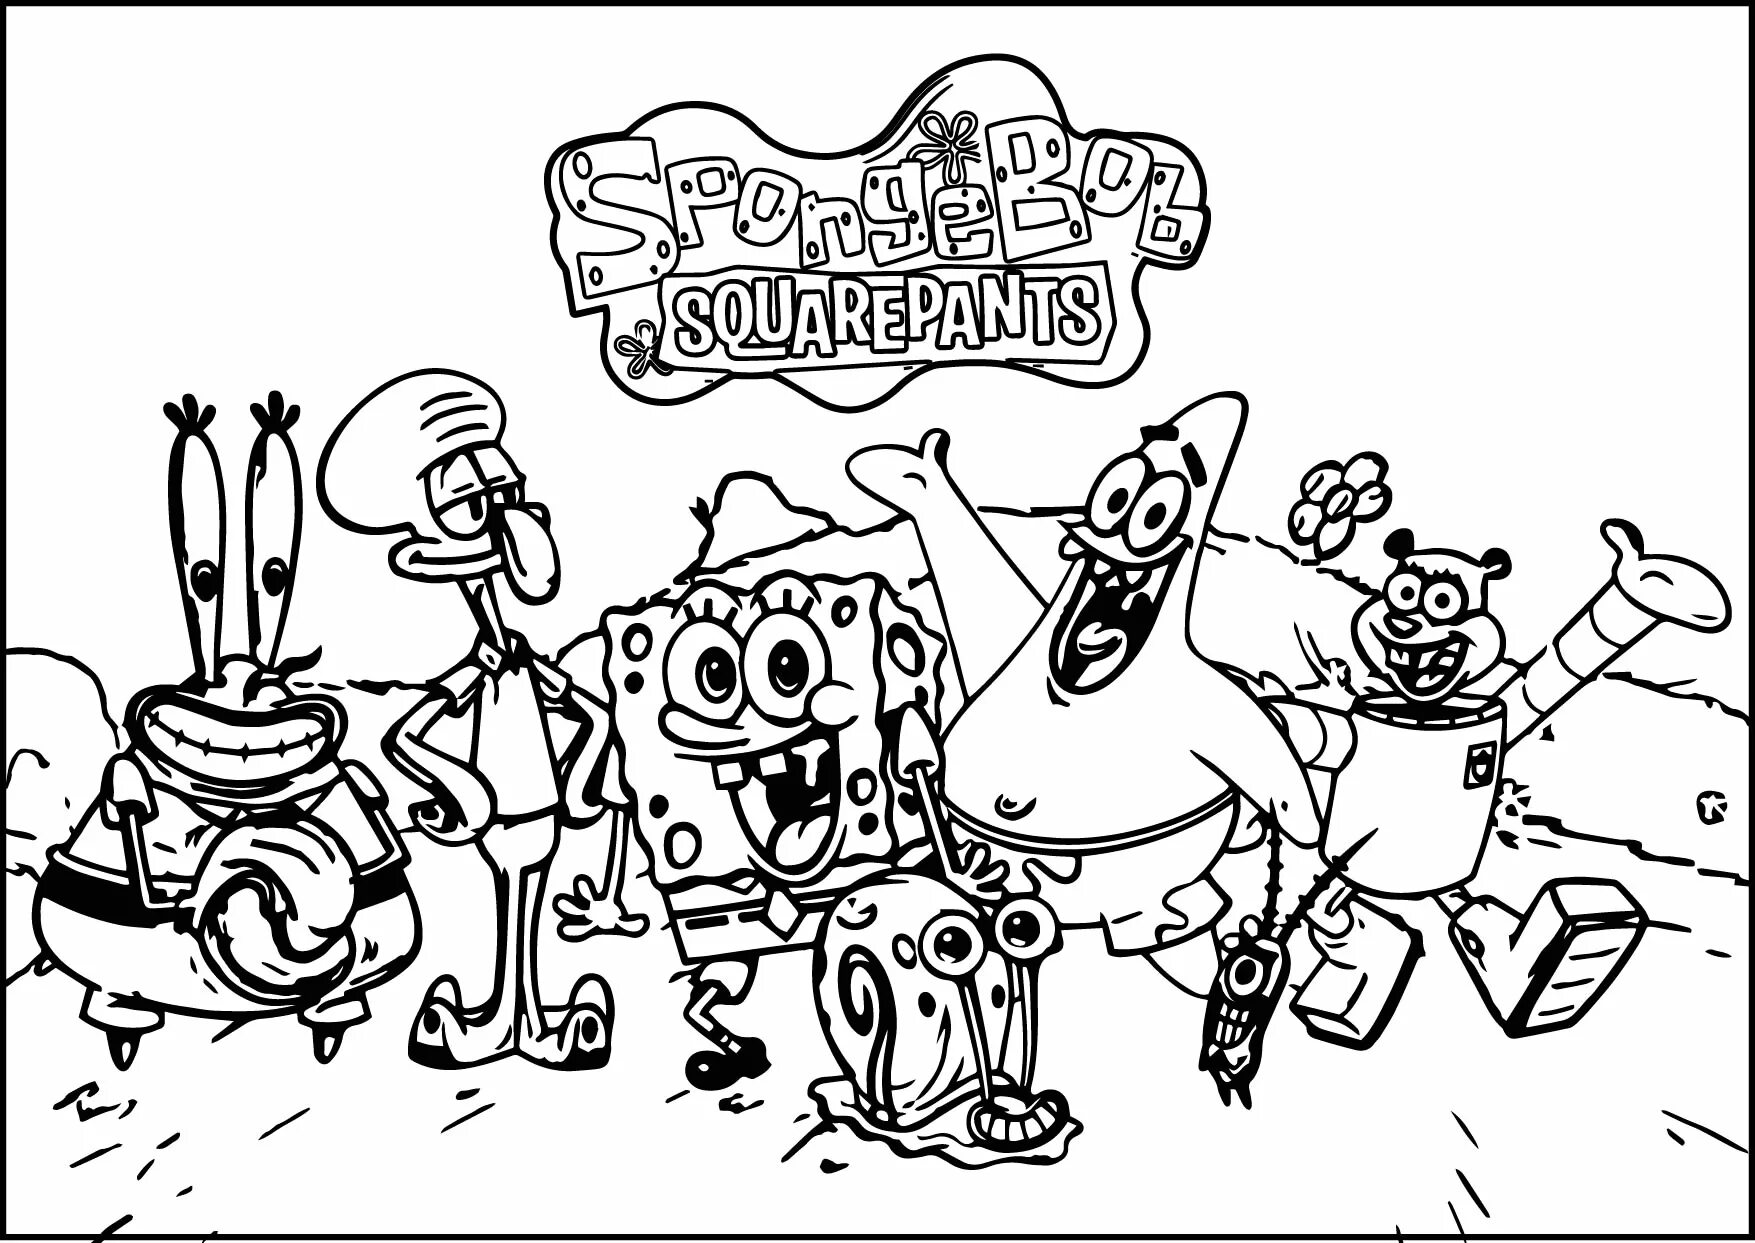 Sparkle spongebob coloring game